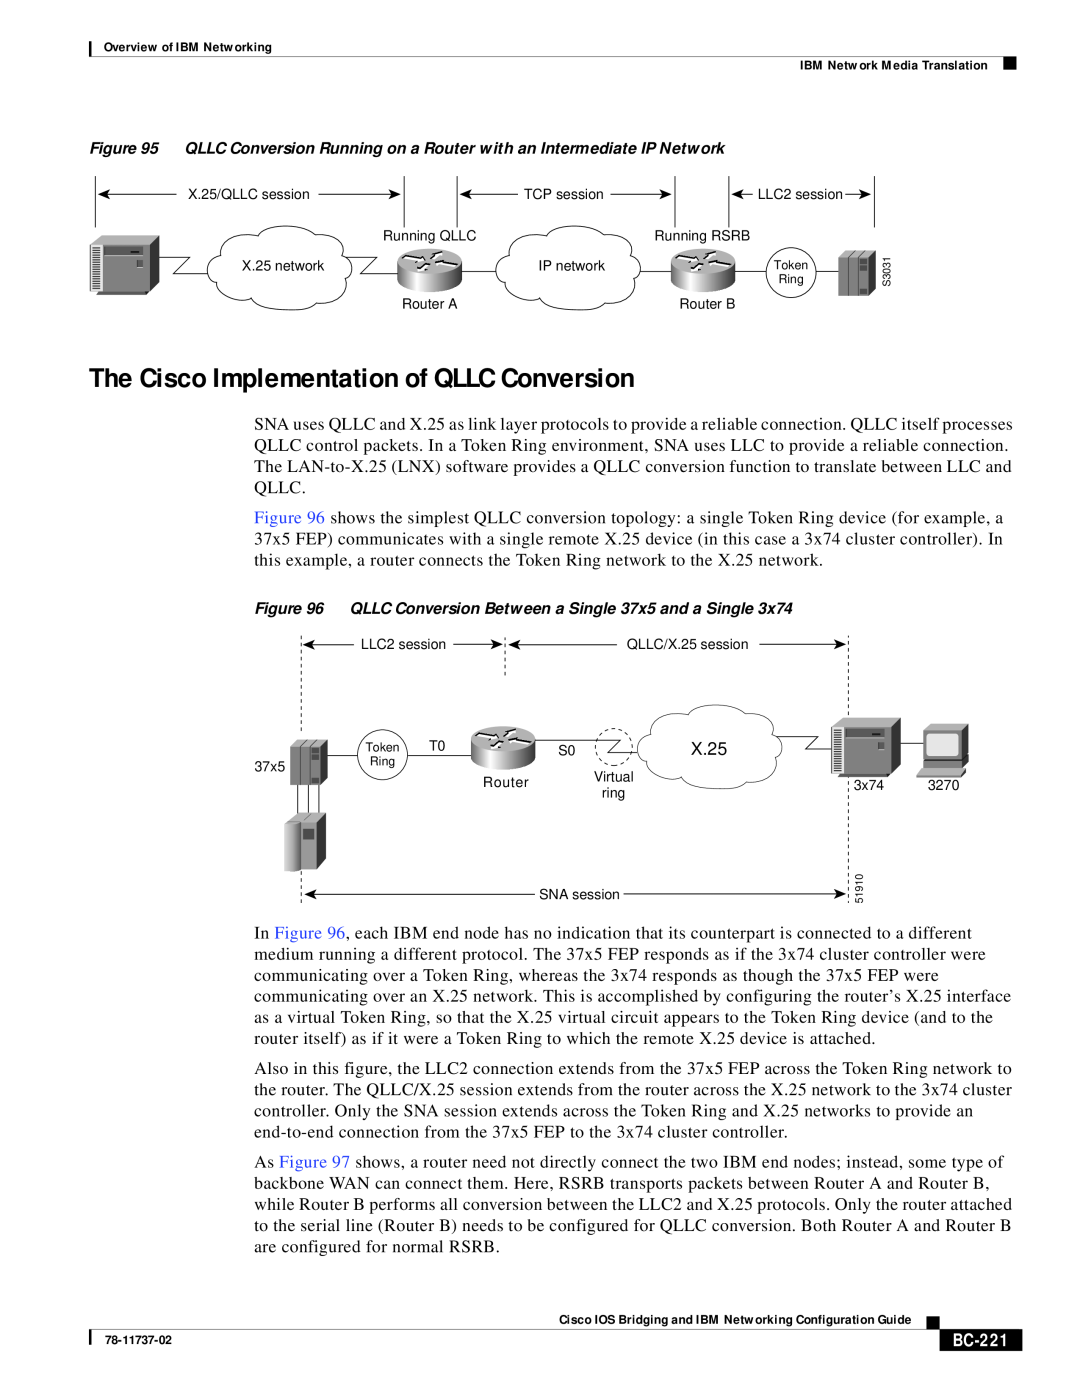 IBM BC-201 manual The Cisco Implementation of QLLC Conversion, BC-221 